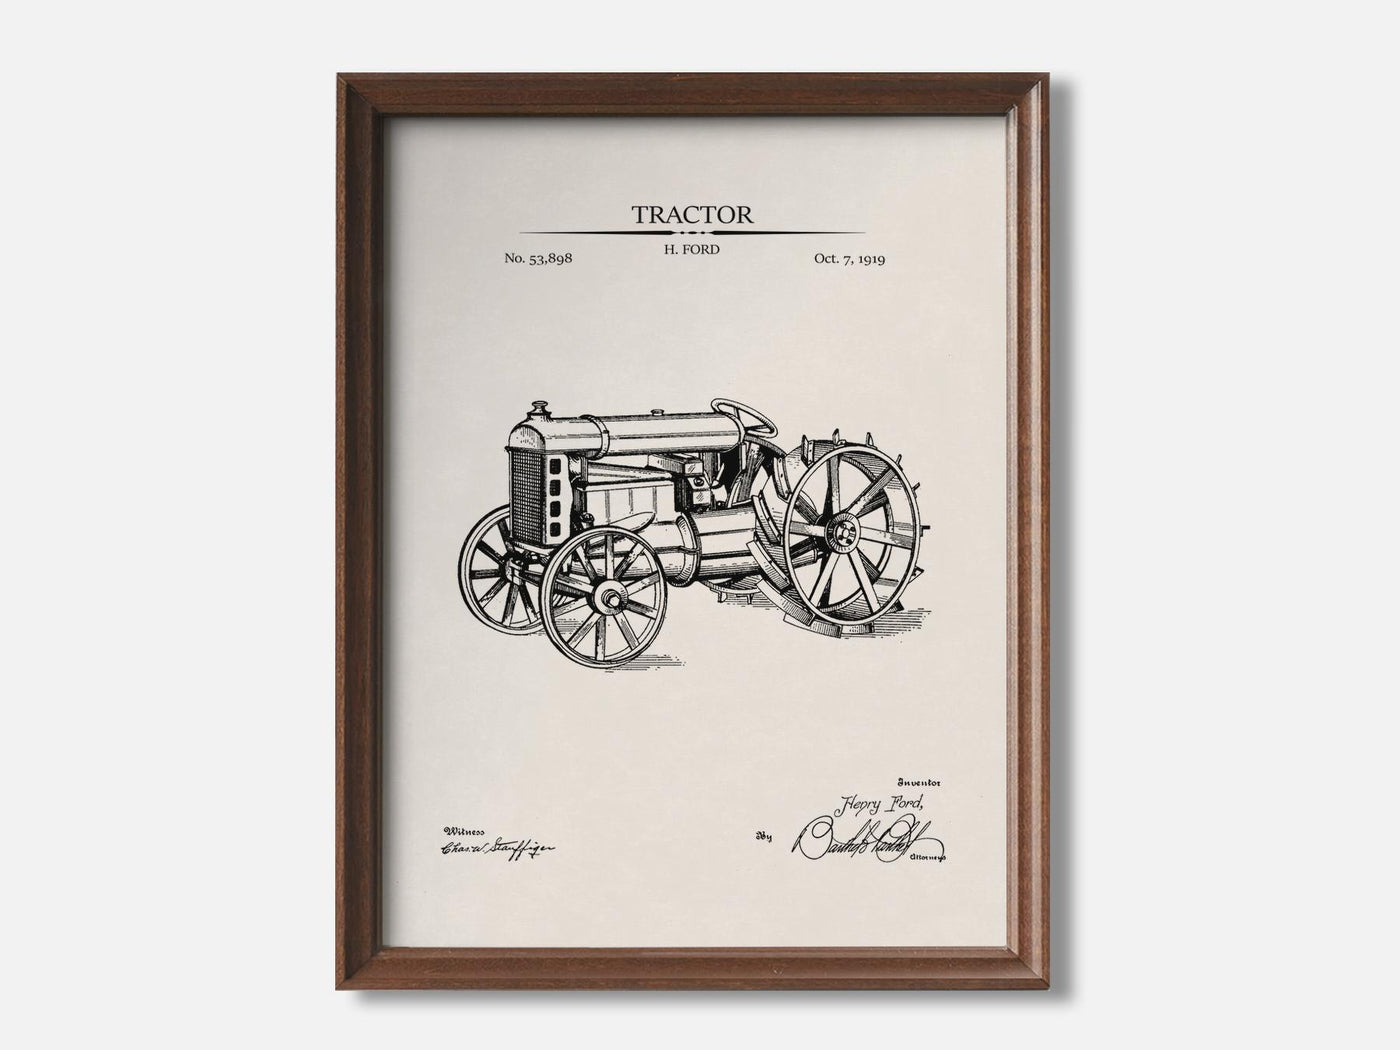 Tractor Patent Print mockup - A_t10025.3-V1-PC_F+WA-SS_1-PS_5x7-C_ivo variant